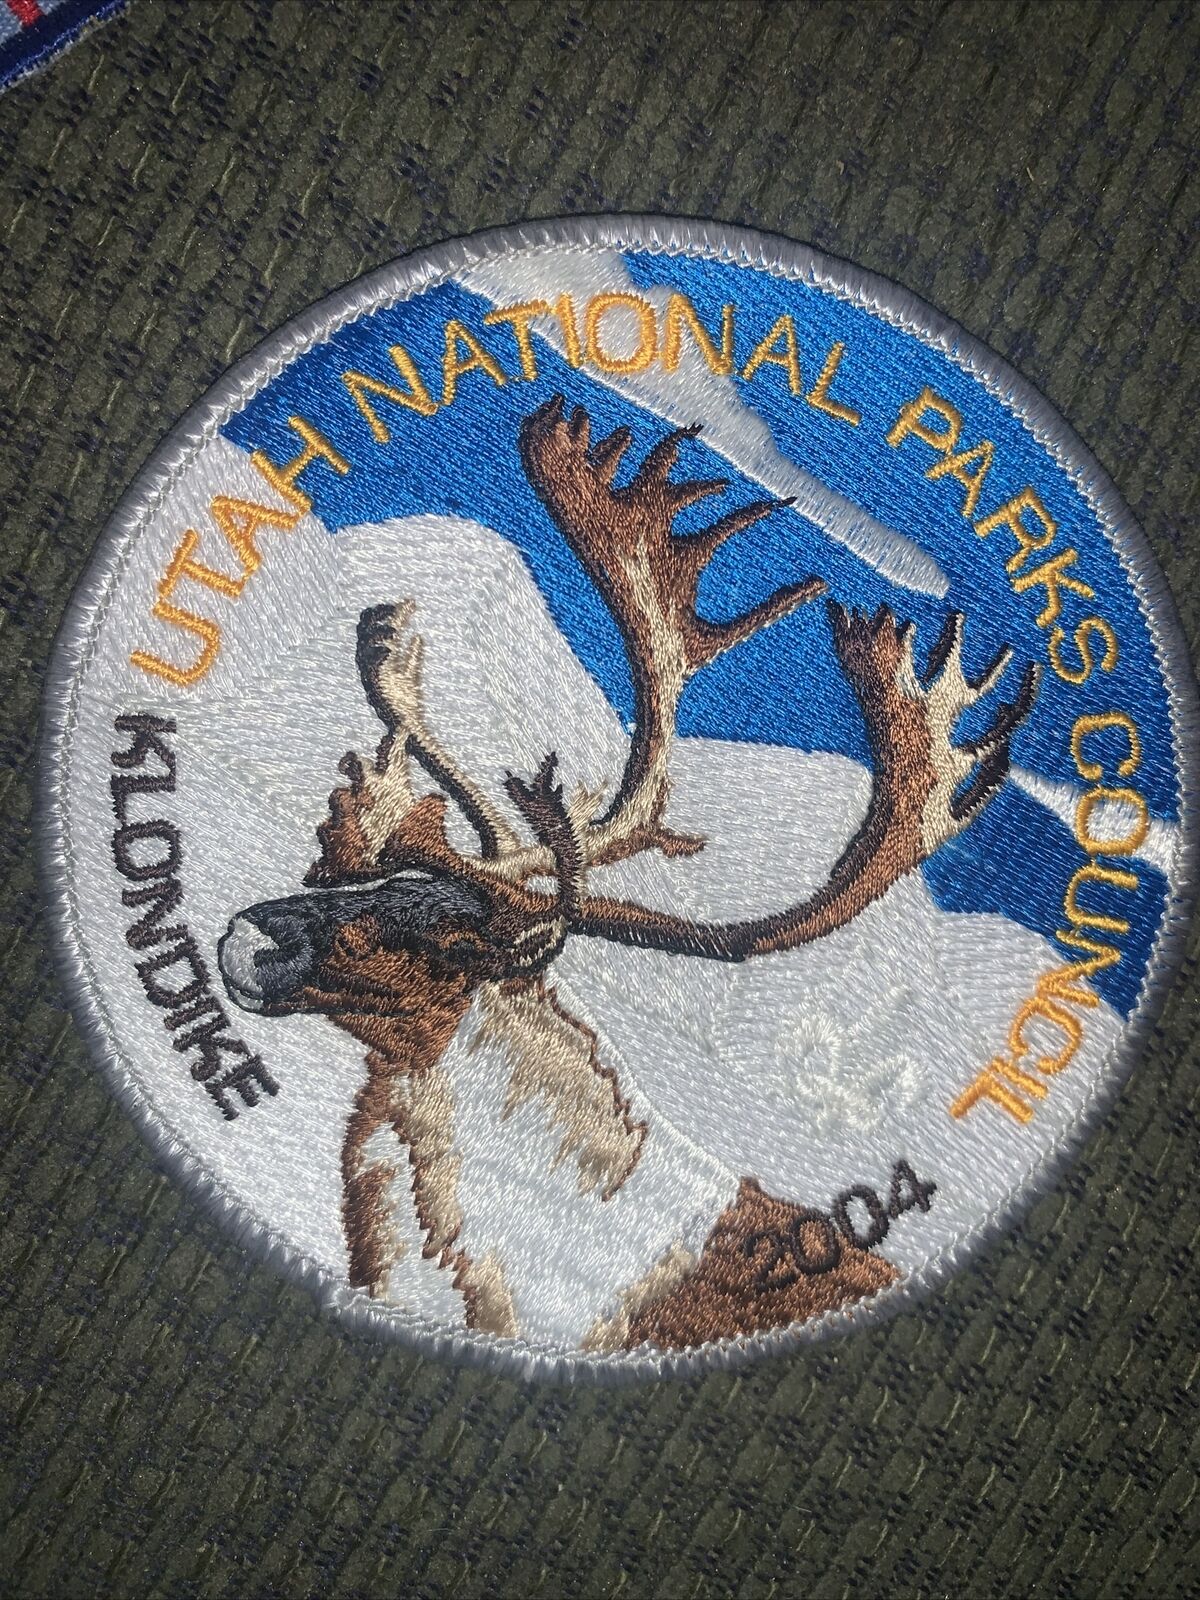 2004 Utah National Parks Council Klondike Derby Boy Scout Patch